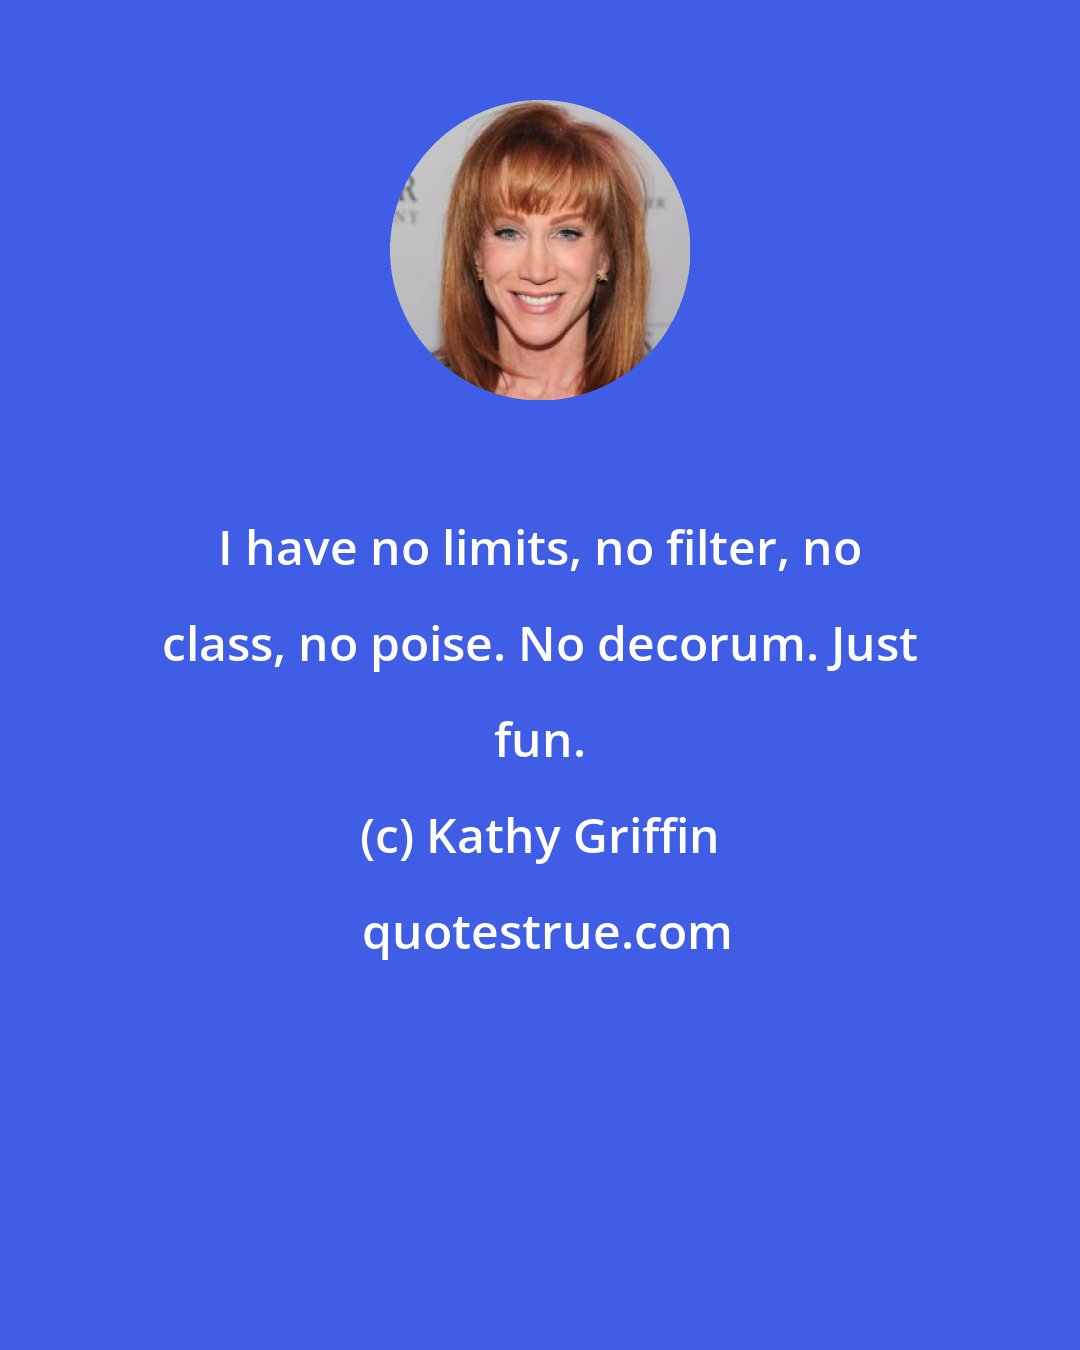 Kathy Griffin: I have no limits, no filter, no class, no poise. No decorum. Just fun.